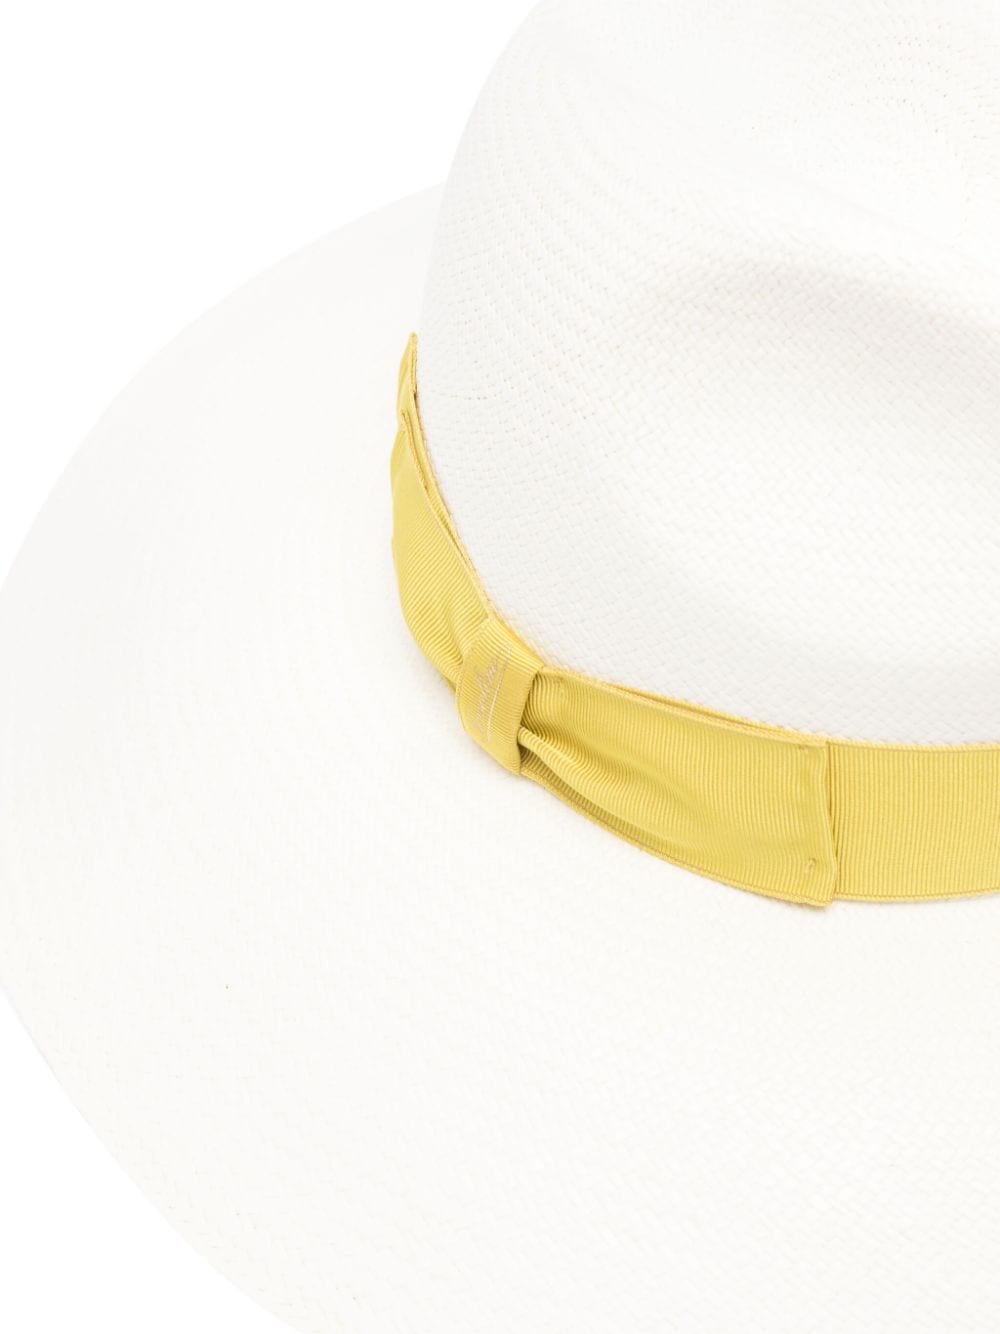 Borsalino Panama hoed - Beige